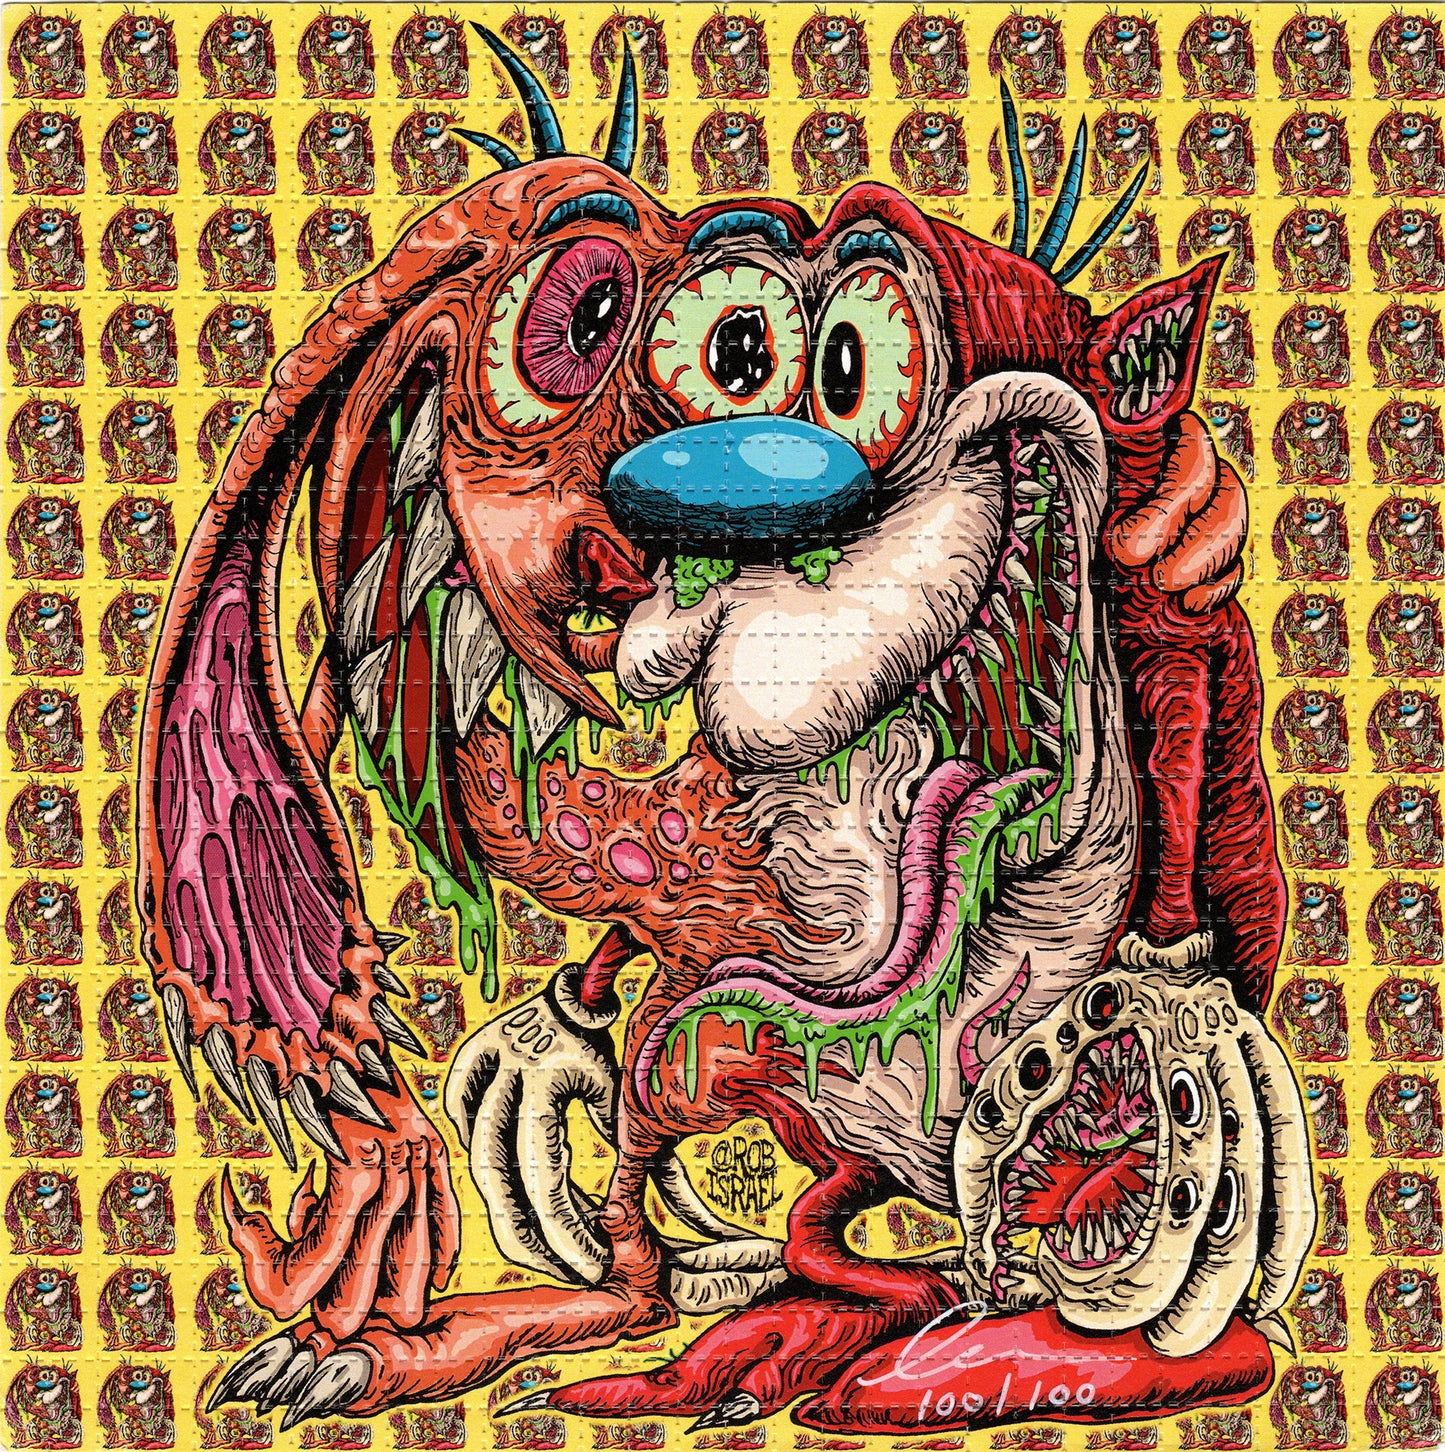 Ren & Stimp by Rob Israel SIGNED Limited Edition LSD blotter art print